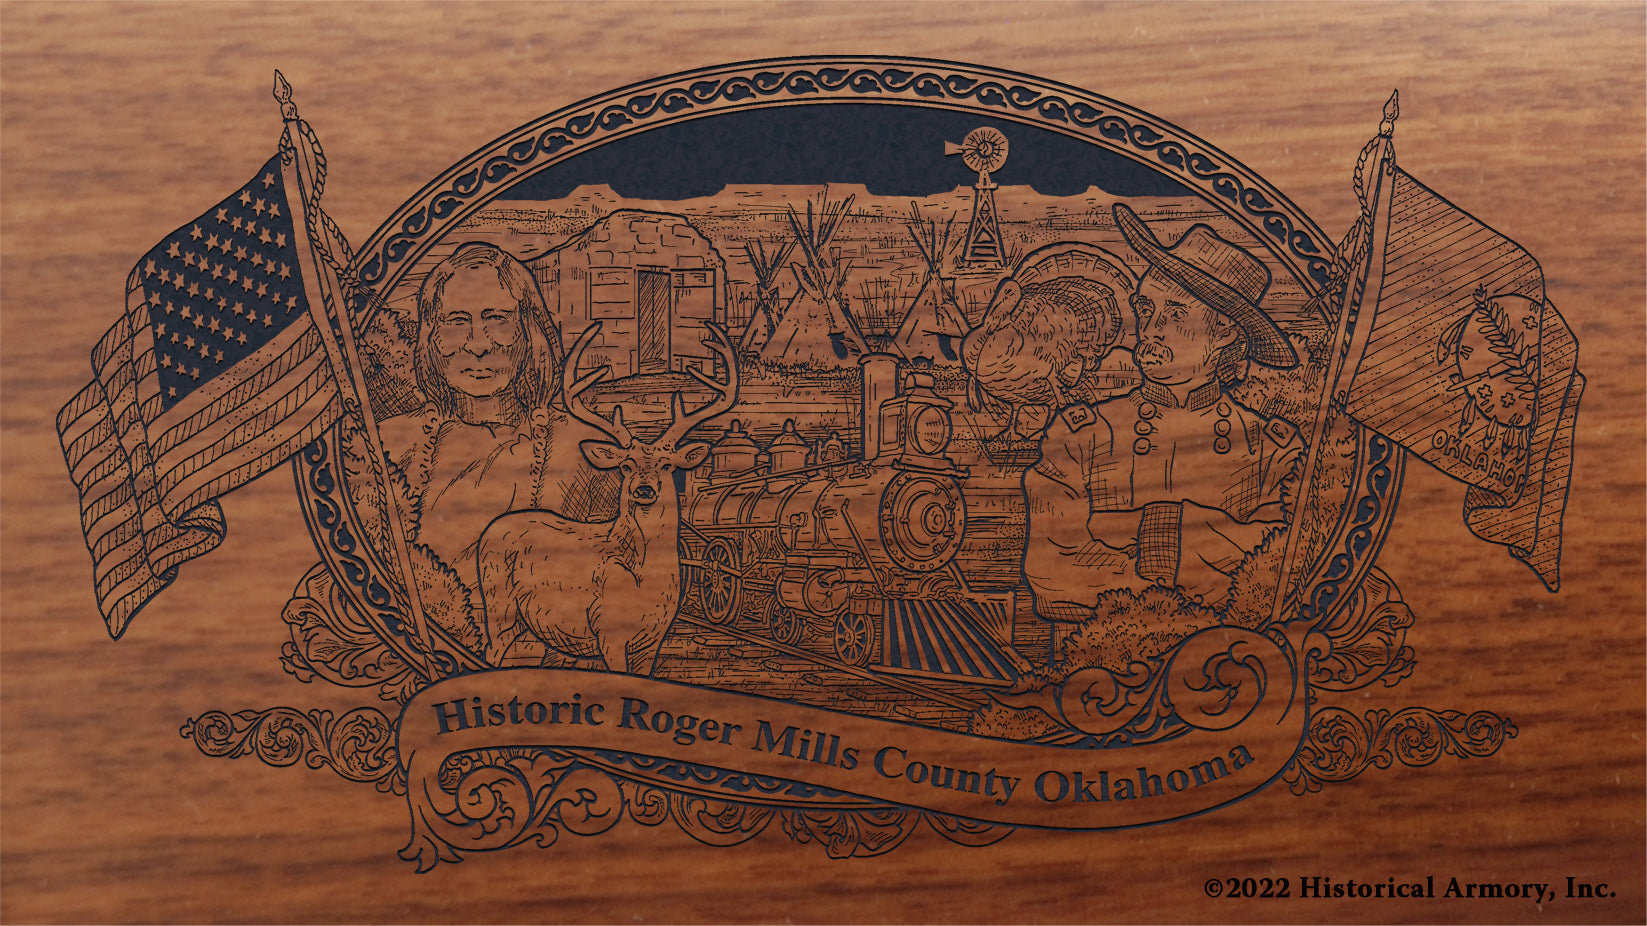 Roger Mills County Oklahoma Engraved Rifle Buttstock